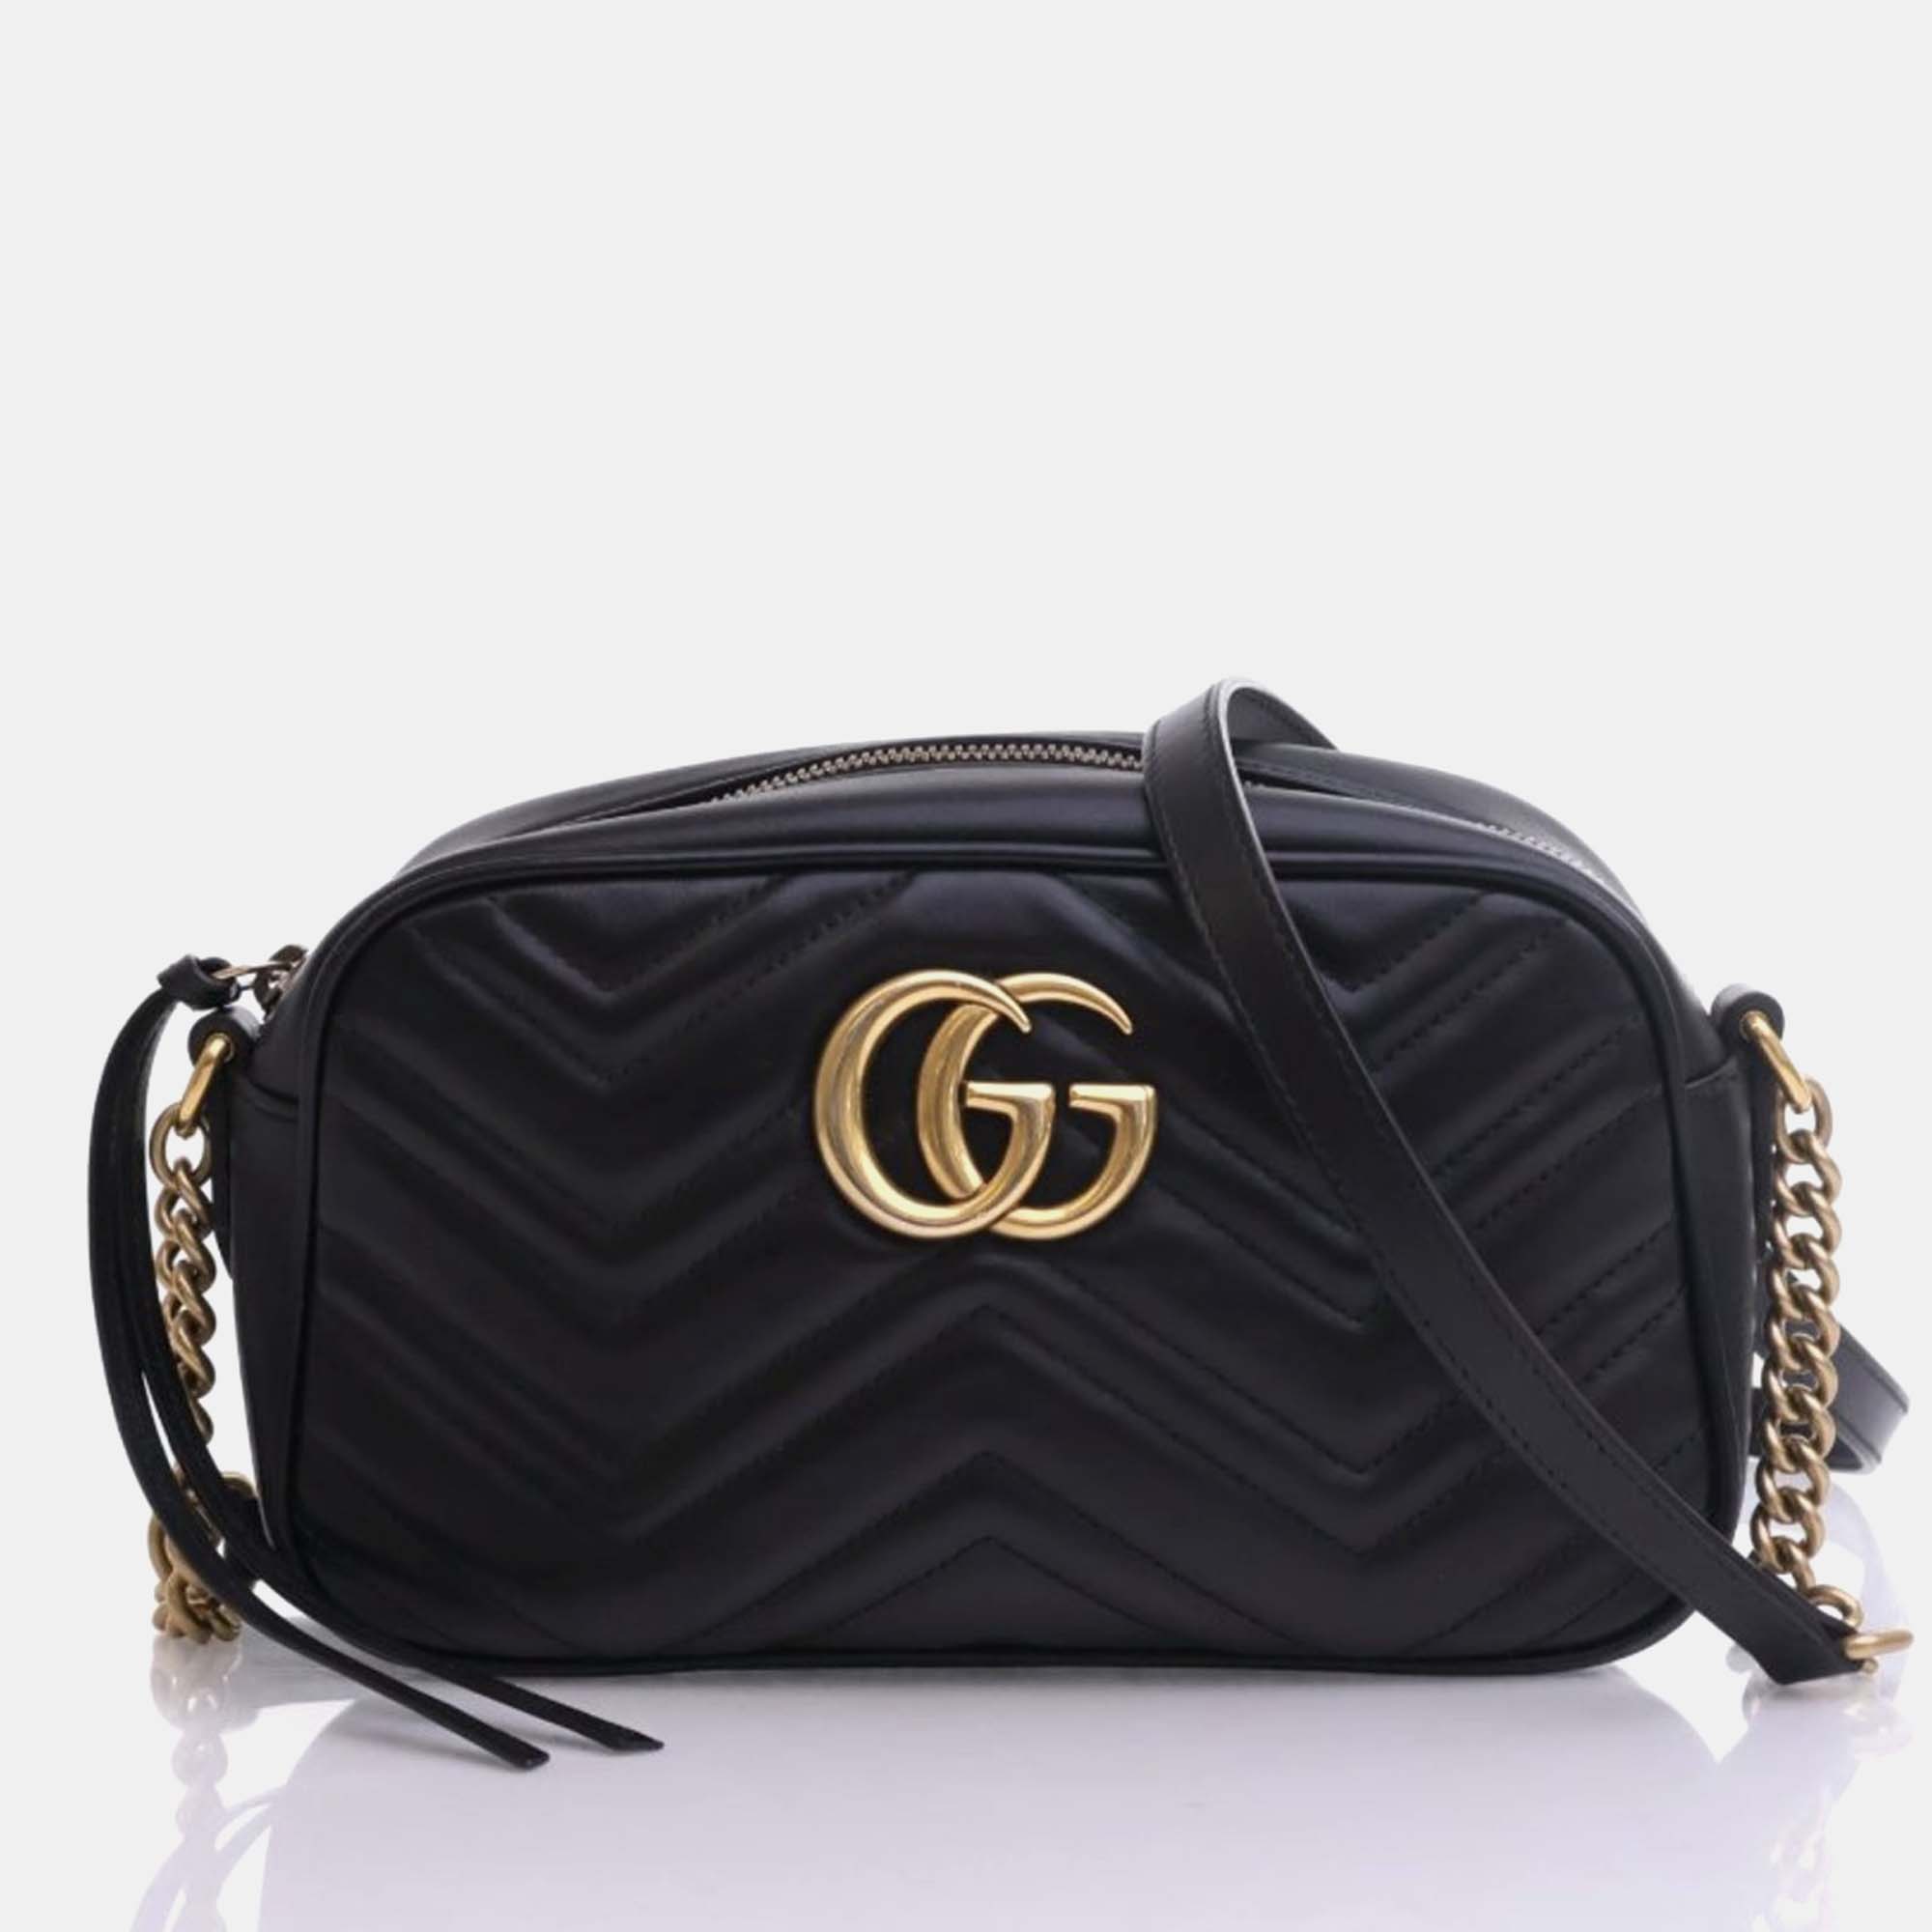 Gucci black leather small gg marmont camera bag